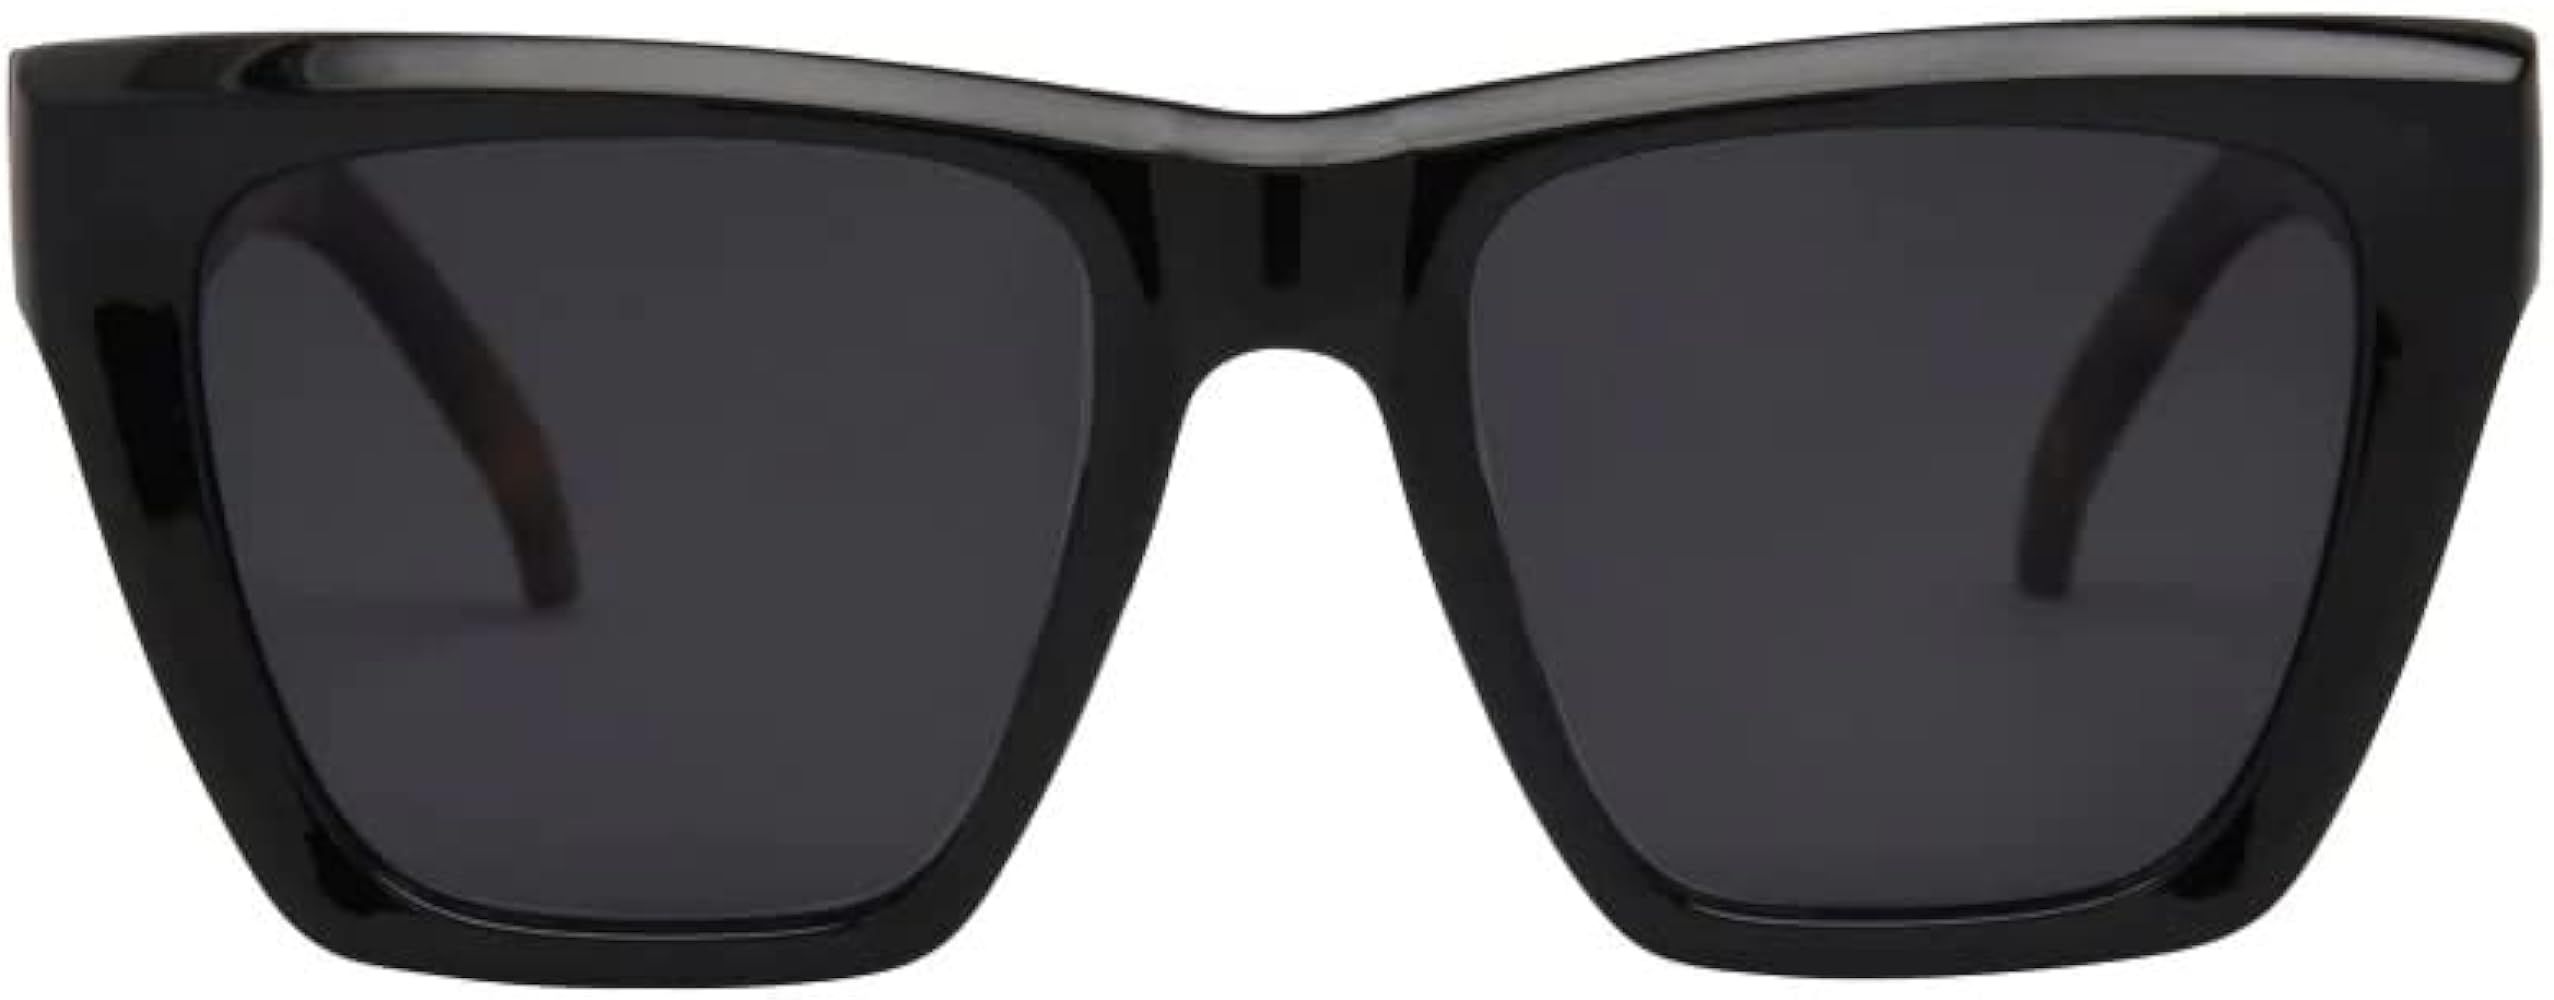 I-SEA Women's Sunglasses - Ava | Amazon (US)